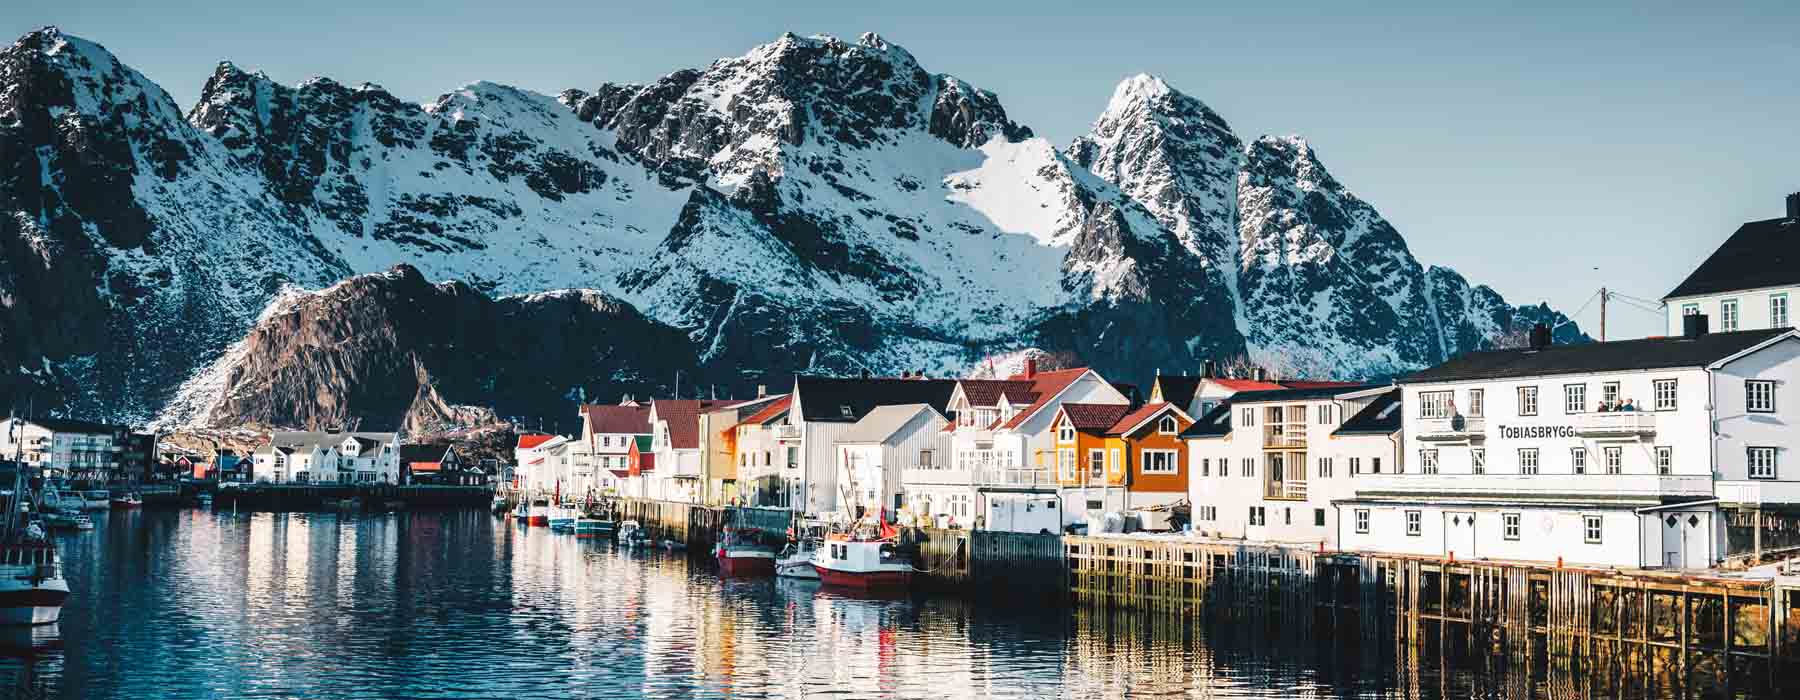 Norway<br class="hidden-md hidden-lg" /> Luxury Holidays